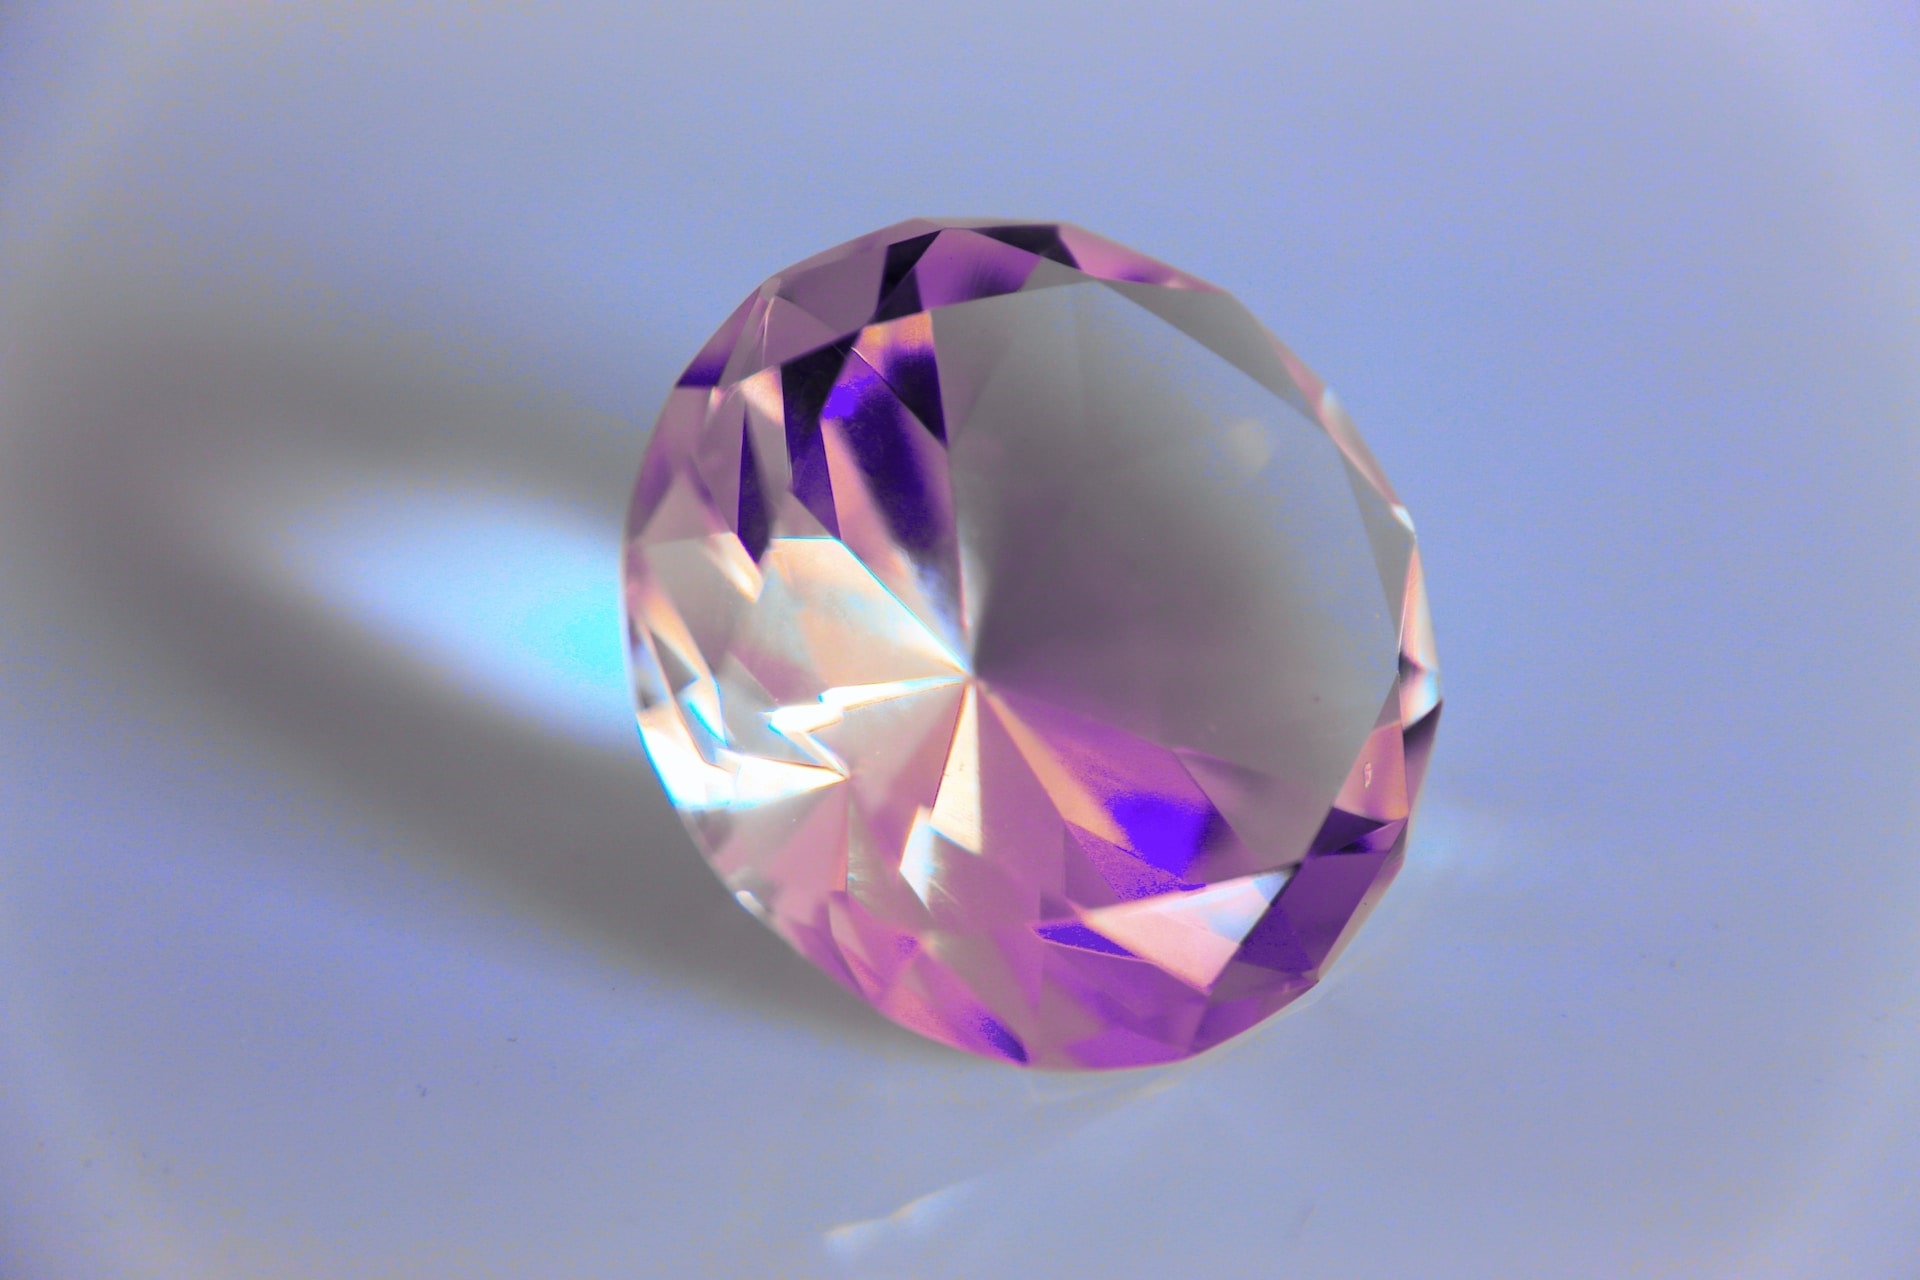 A pink diamond crystal